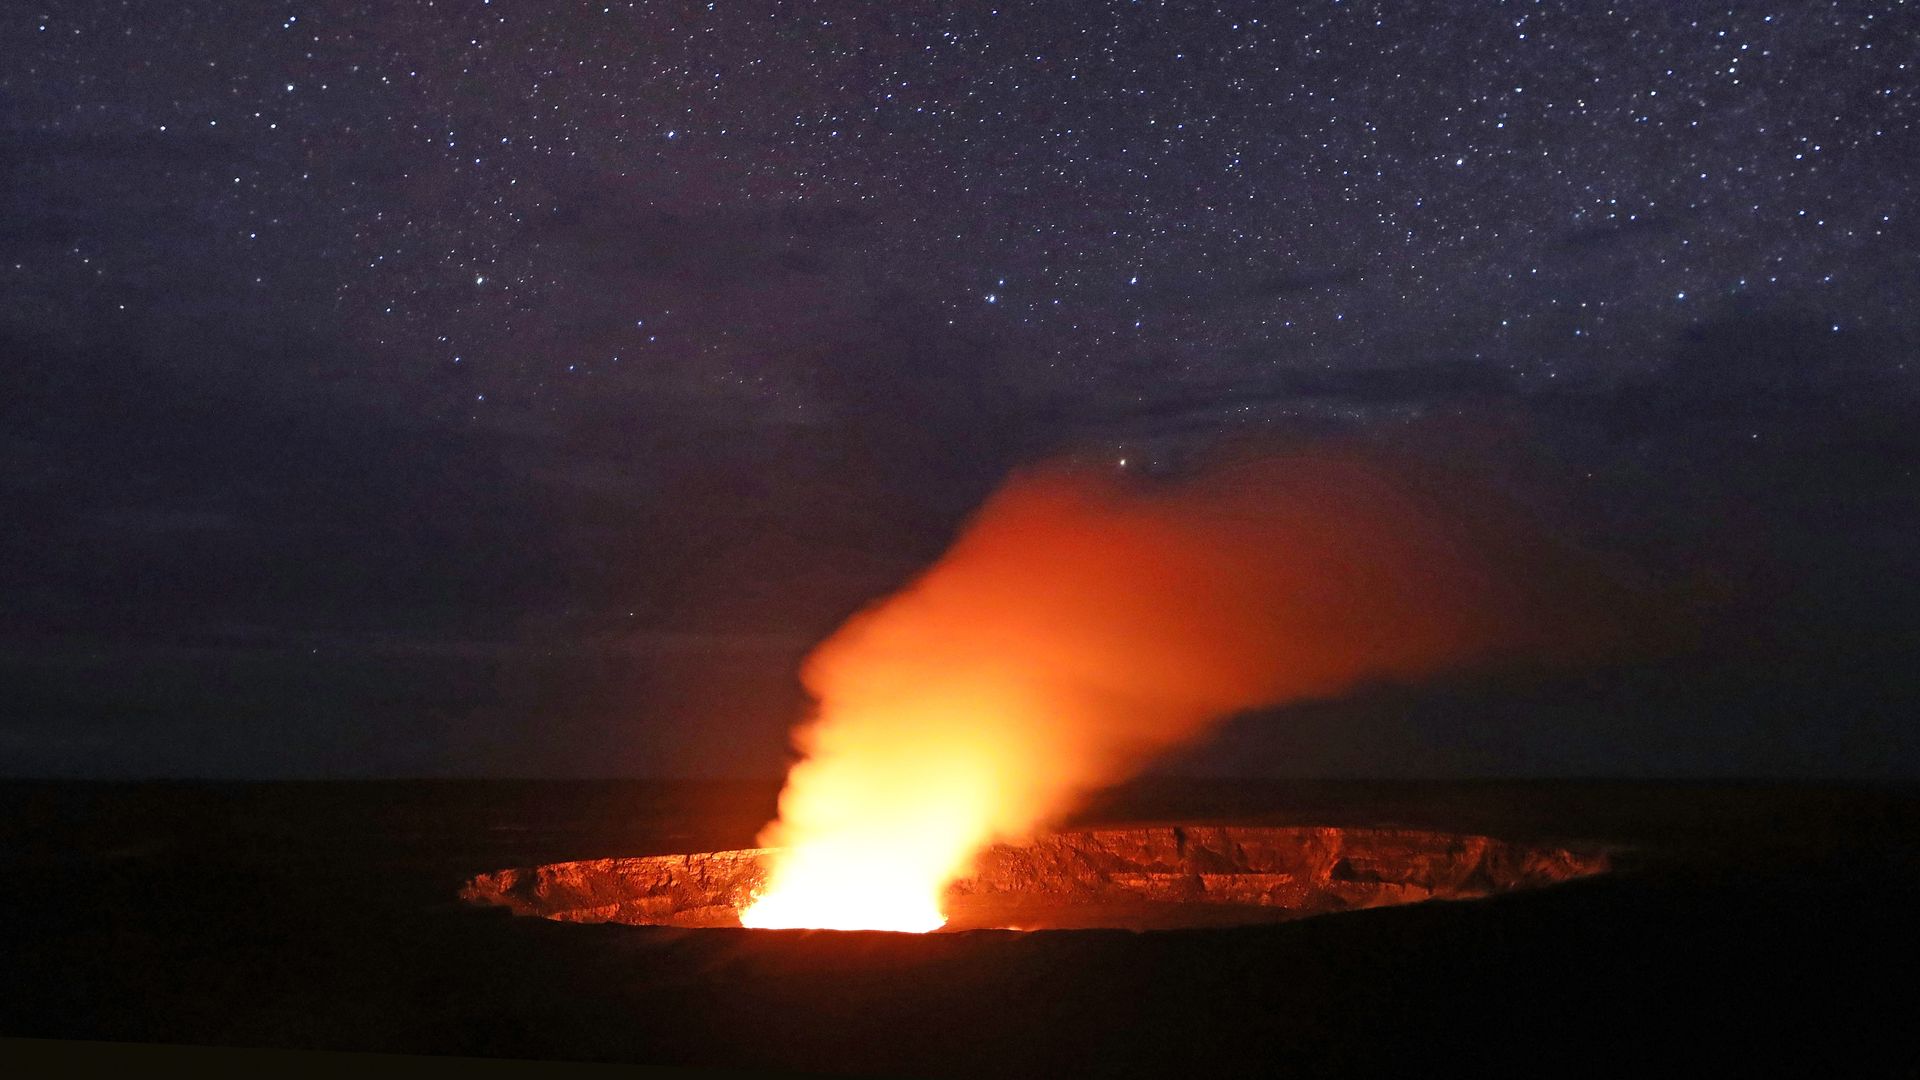 Kilauea causing a plume to rise